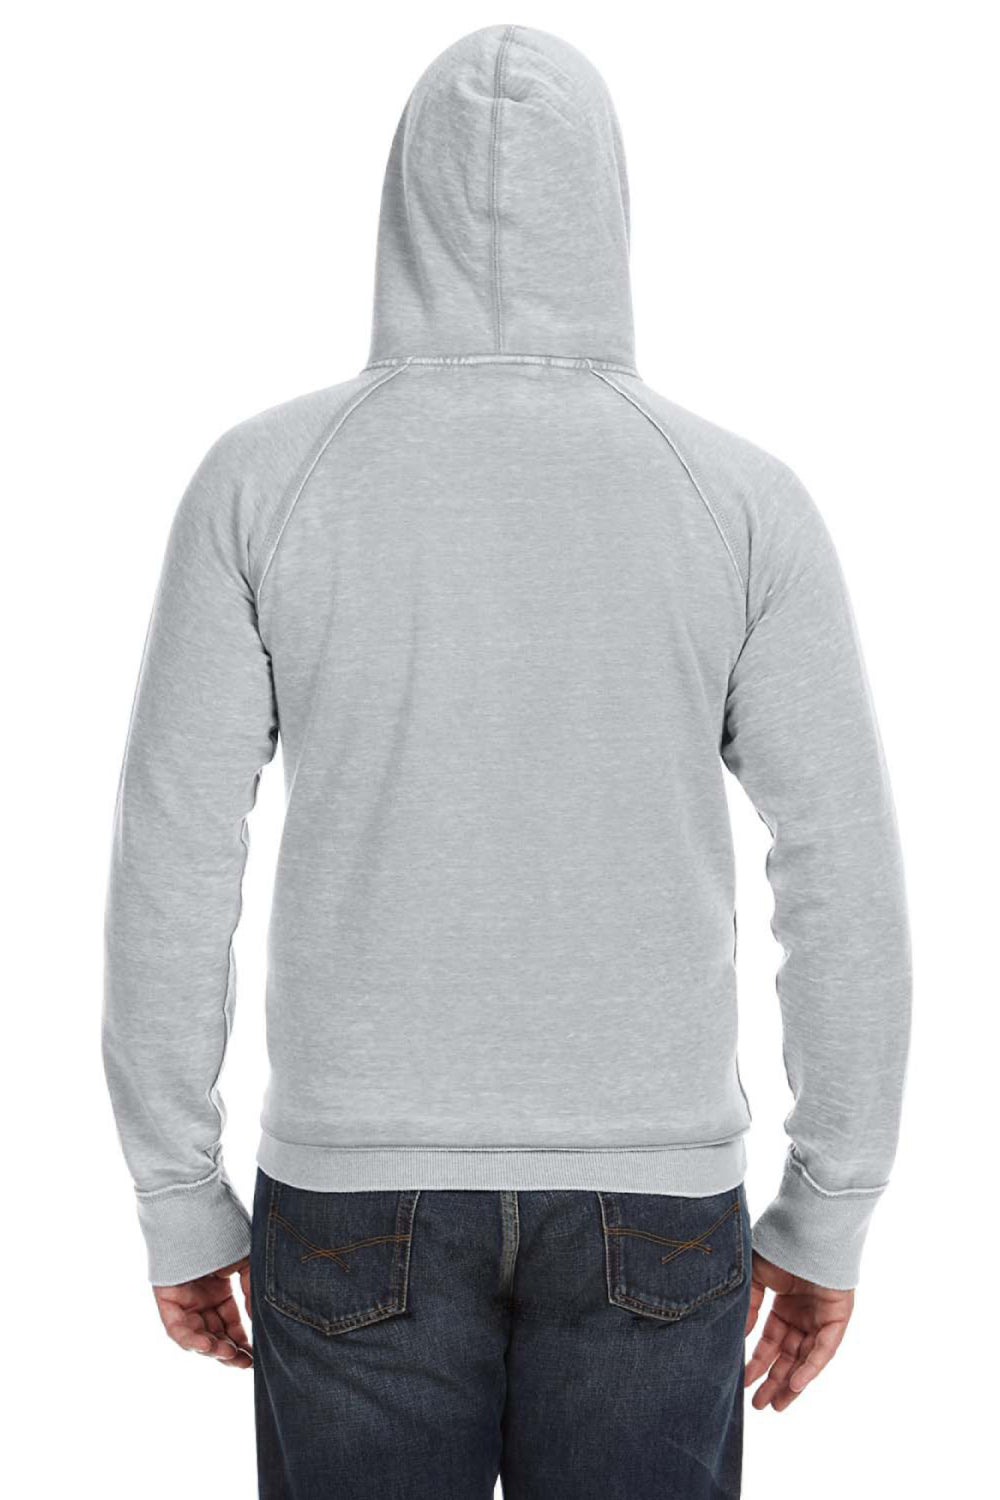 J America JA8915 Mens Vintage Zen Burnout Fleece Hooded Sweatshirt Hoodie Cement Grey Back